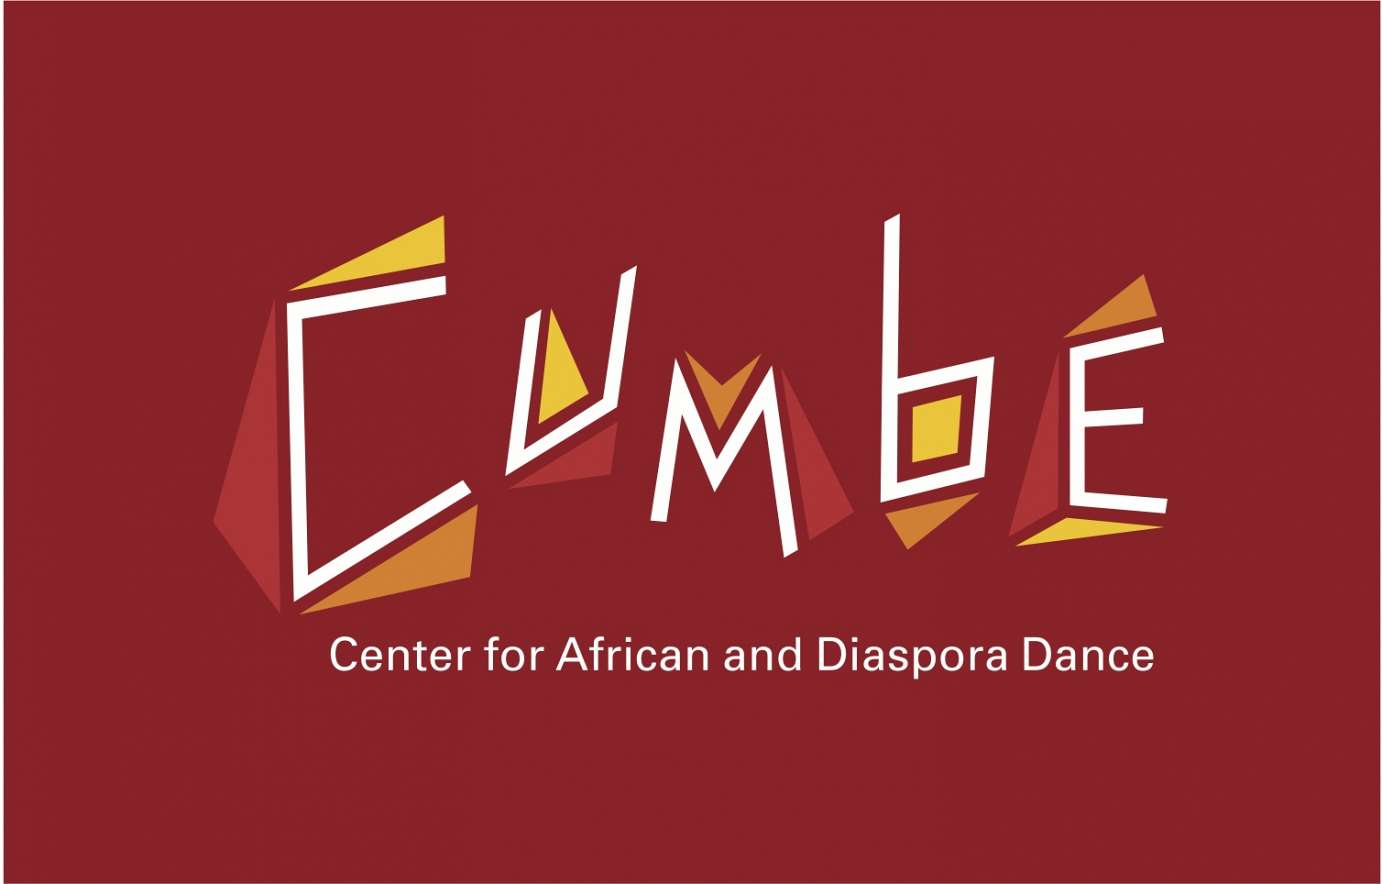 Cumbe Center for African and Diaspora Dance